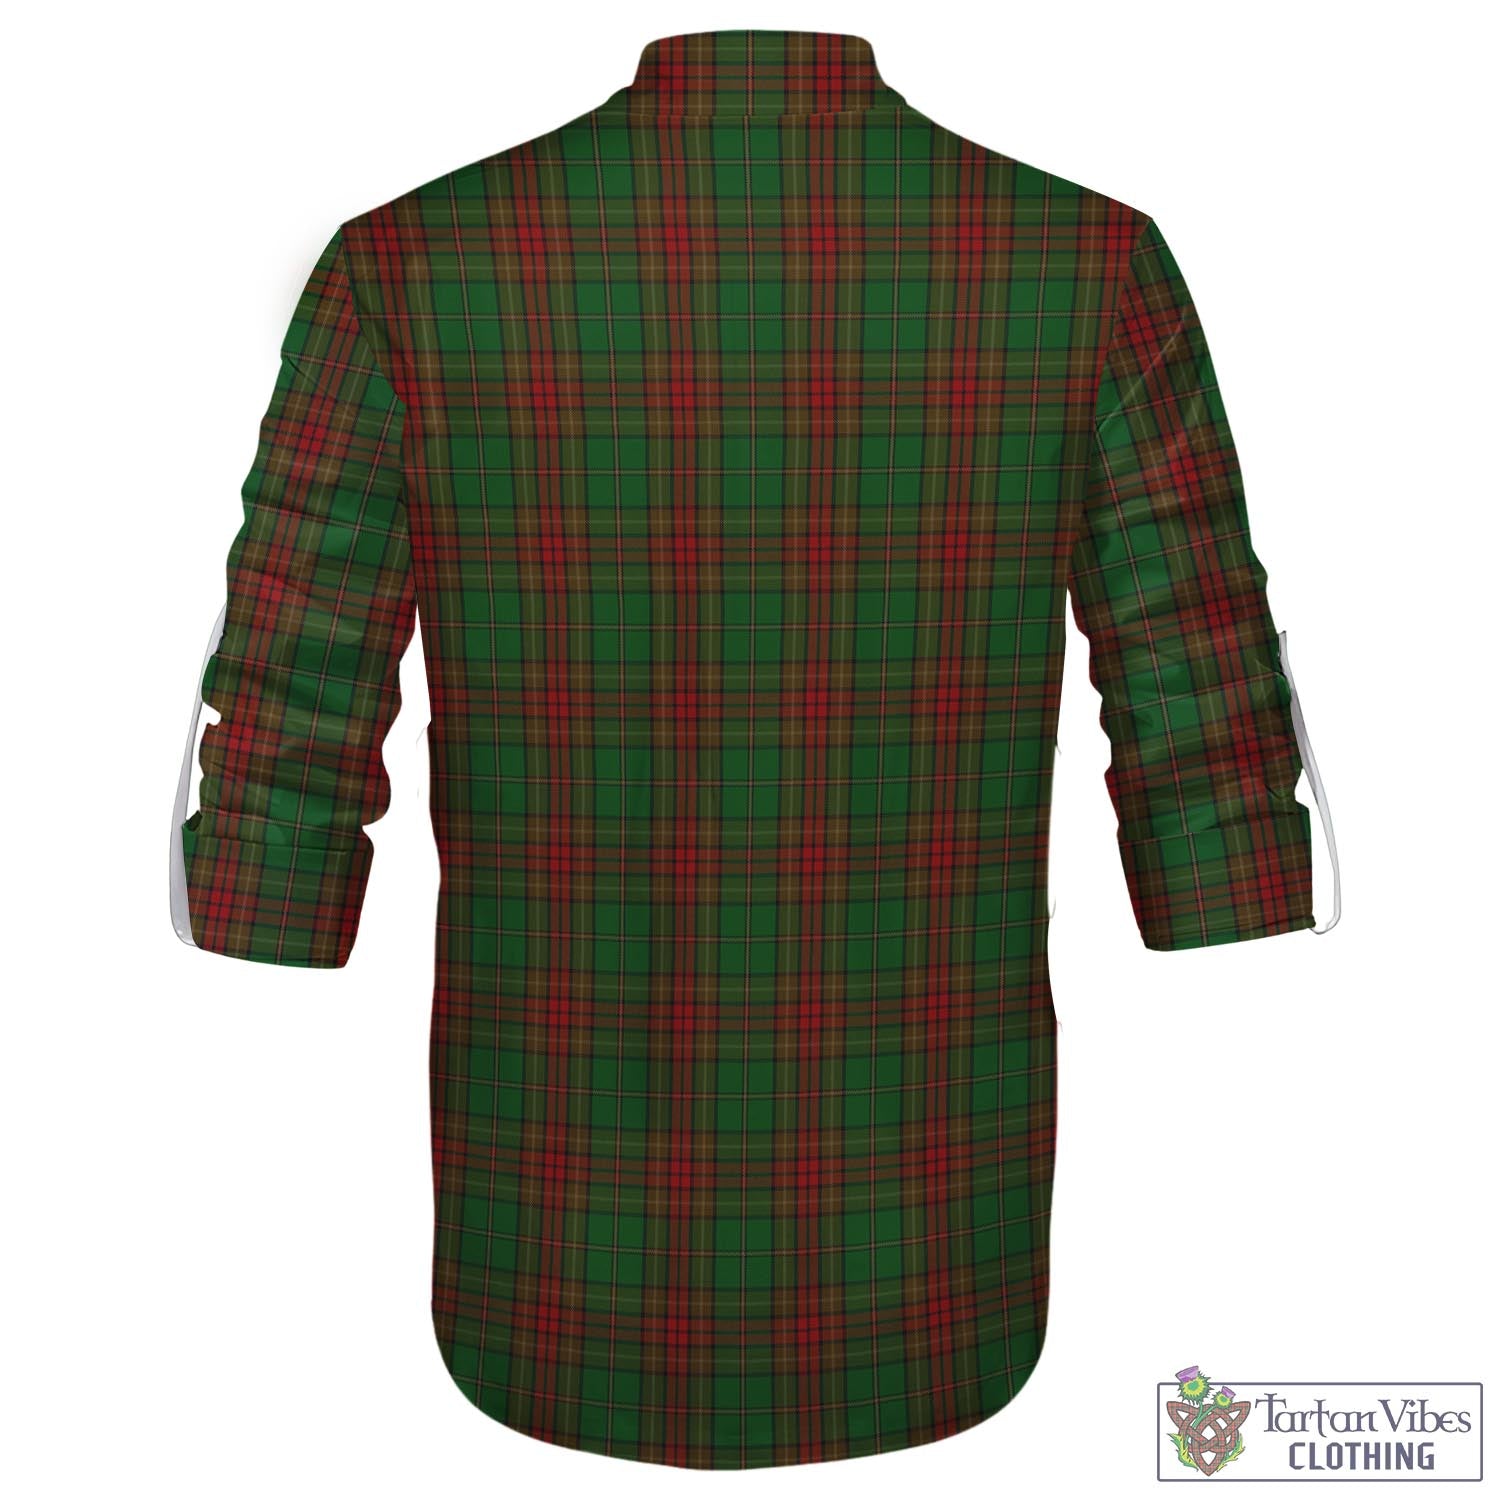 Tartan Vibes Clothing Cavan County Ireland Tartan Men's Scottish Traditional Jacobite Ghillie Kilt Shirt